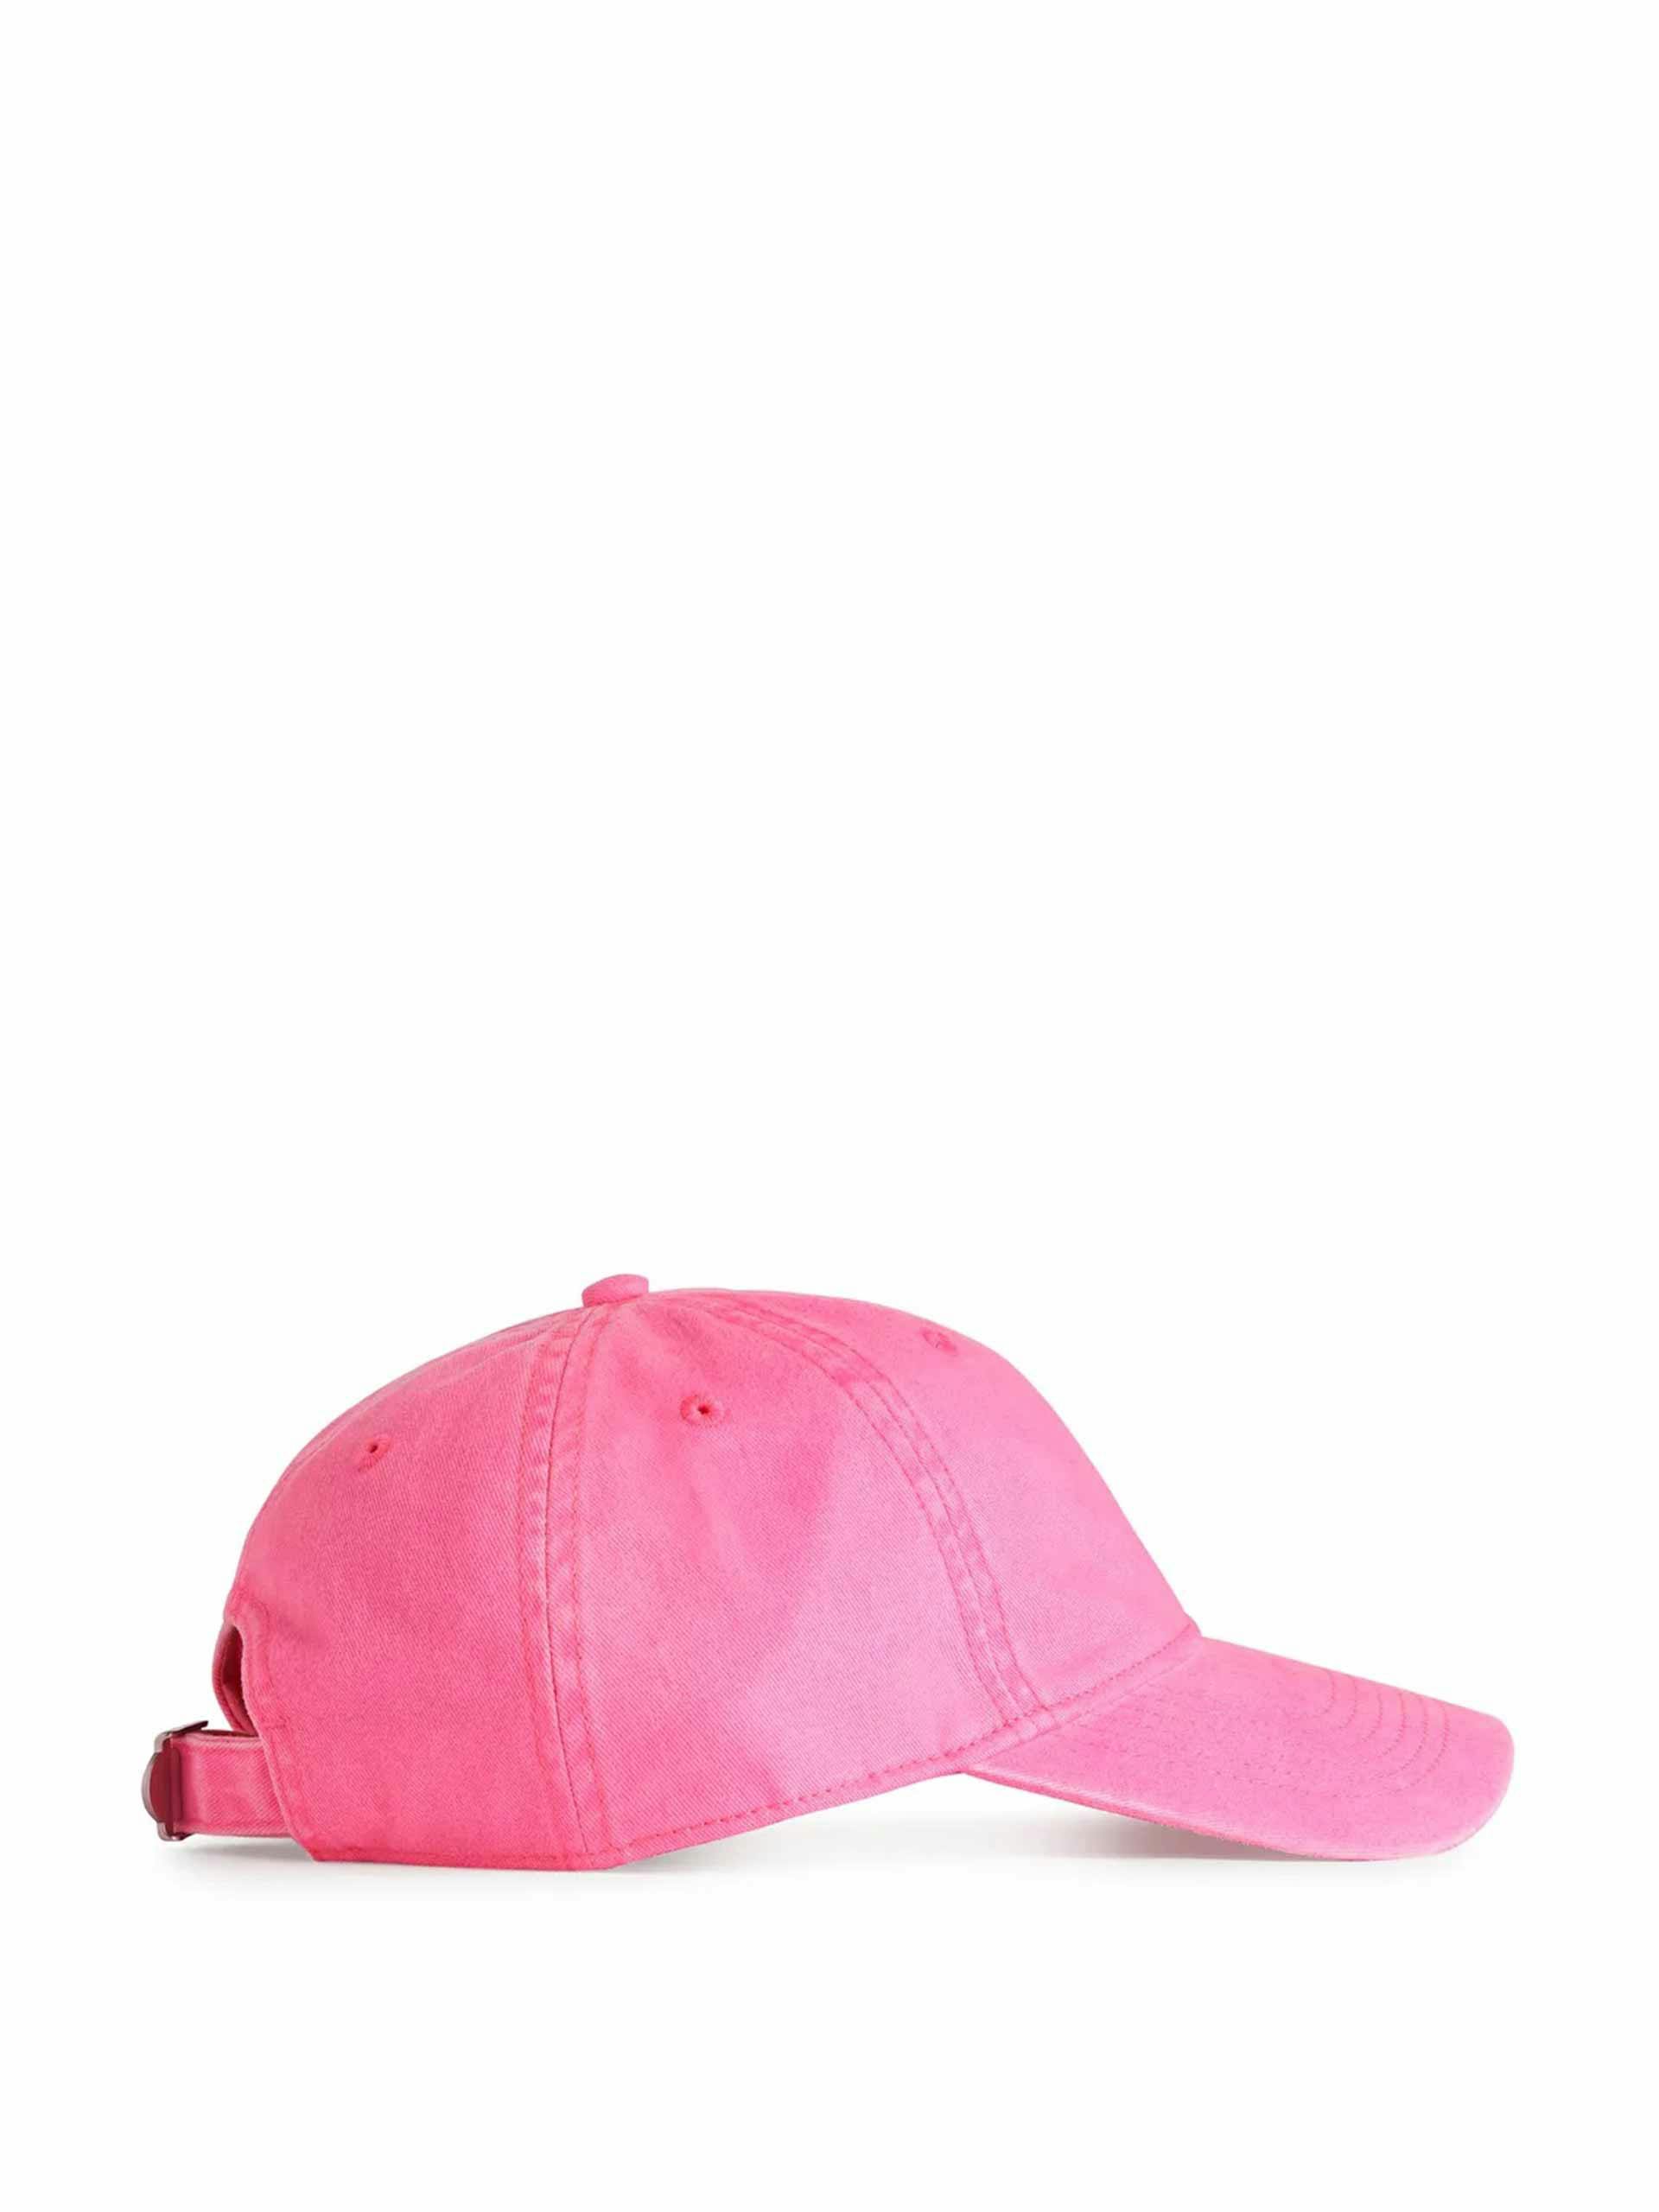 Pink washed cotton cap